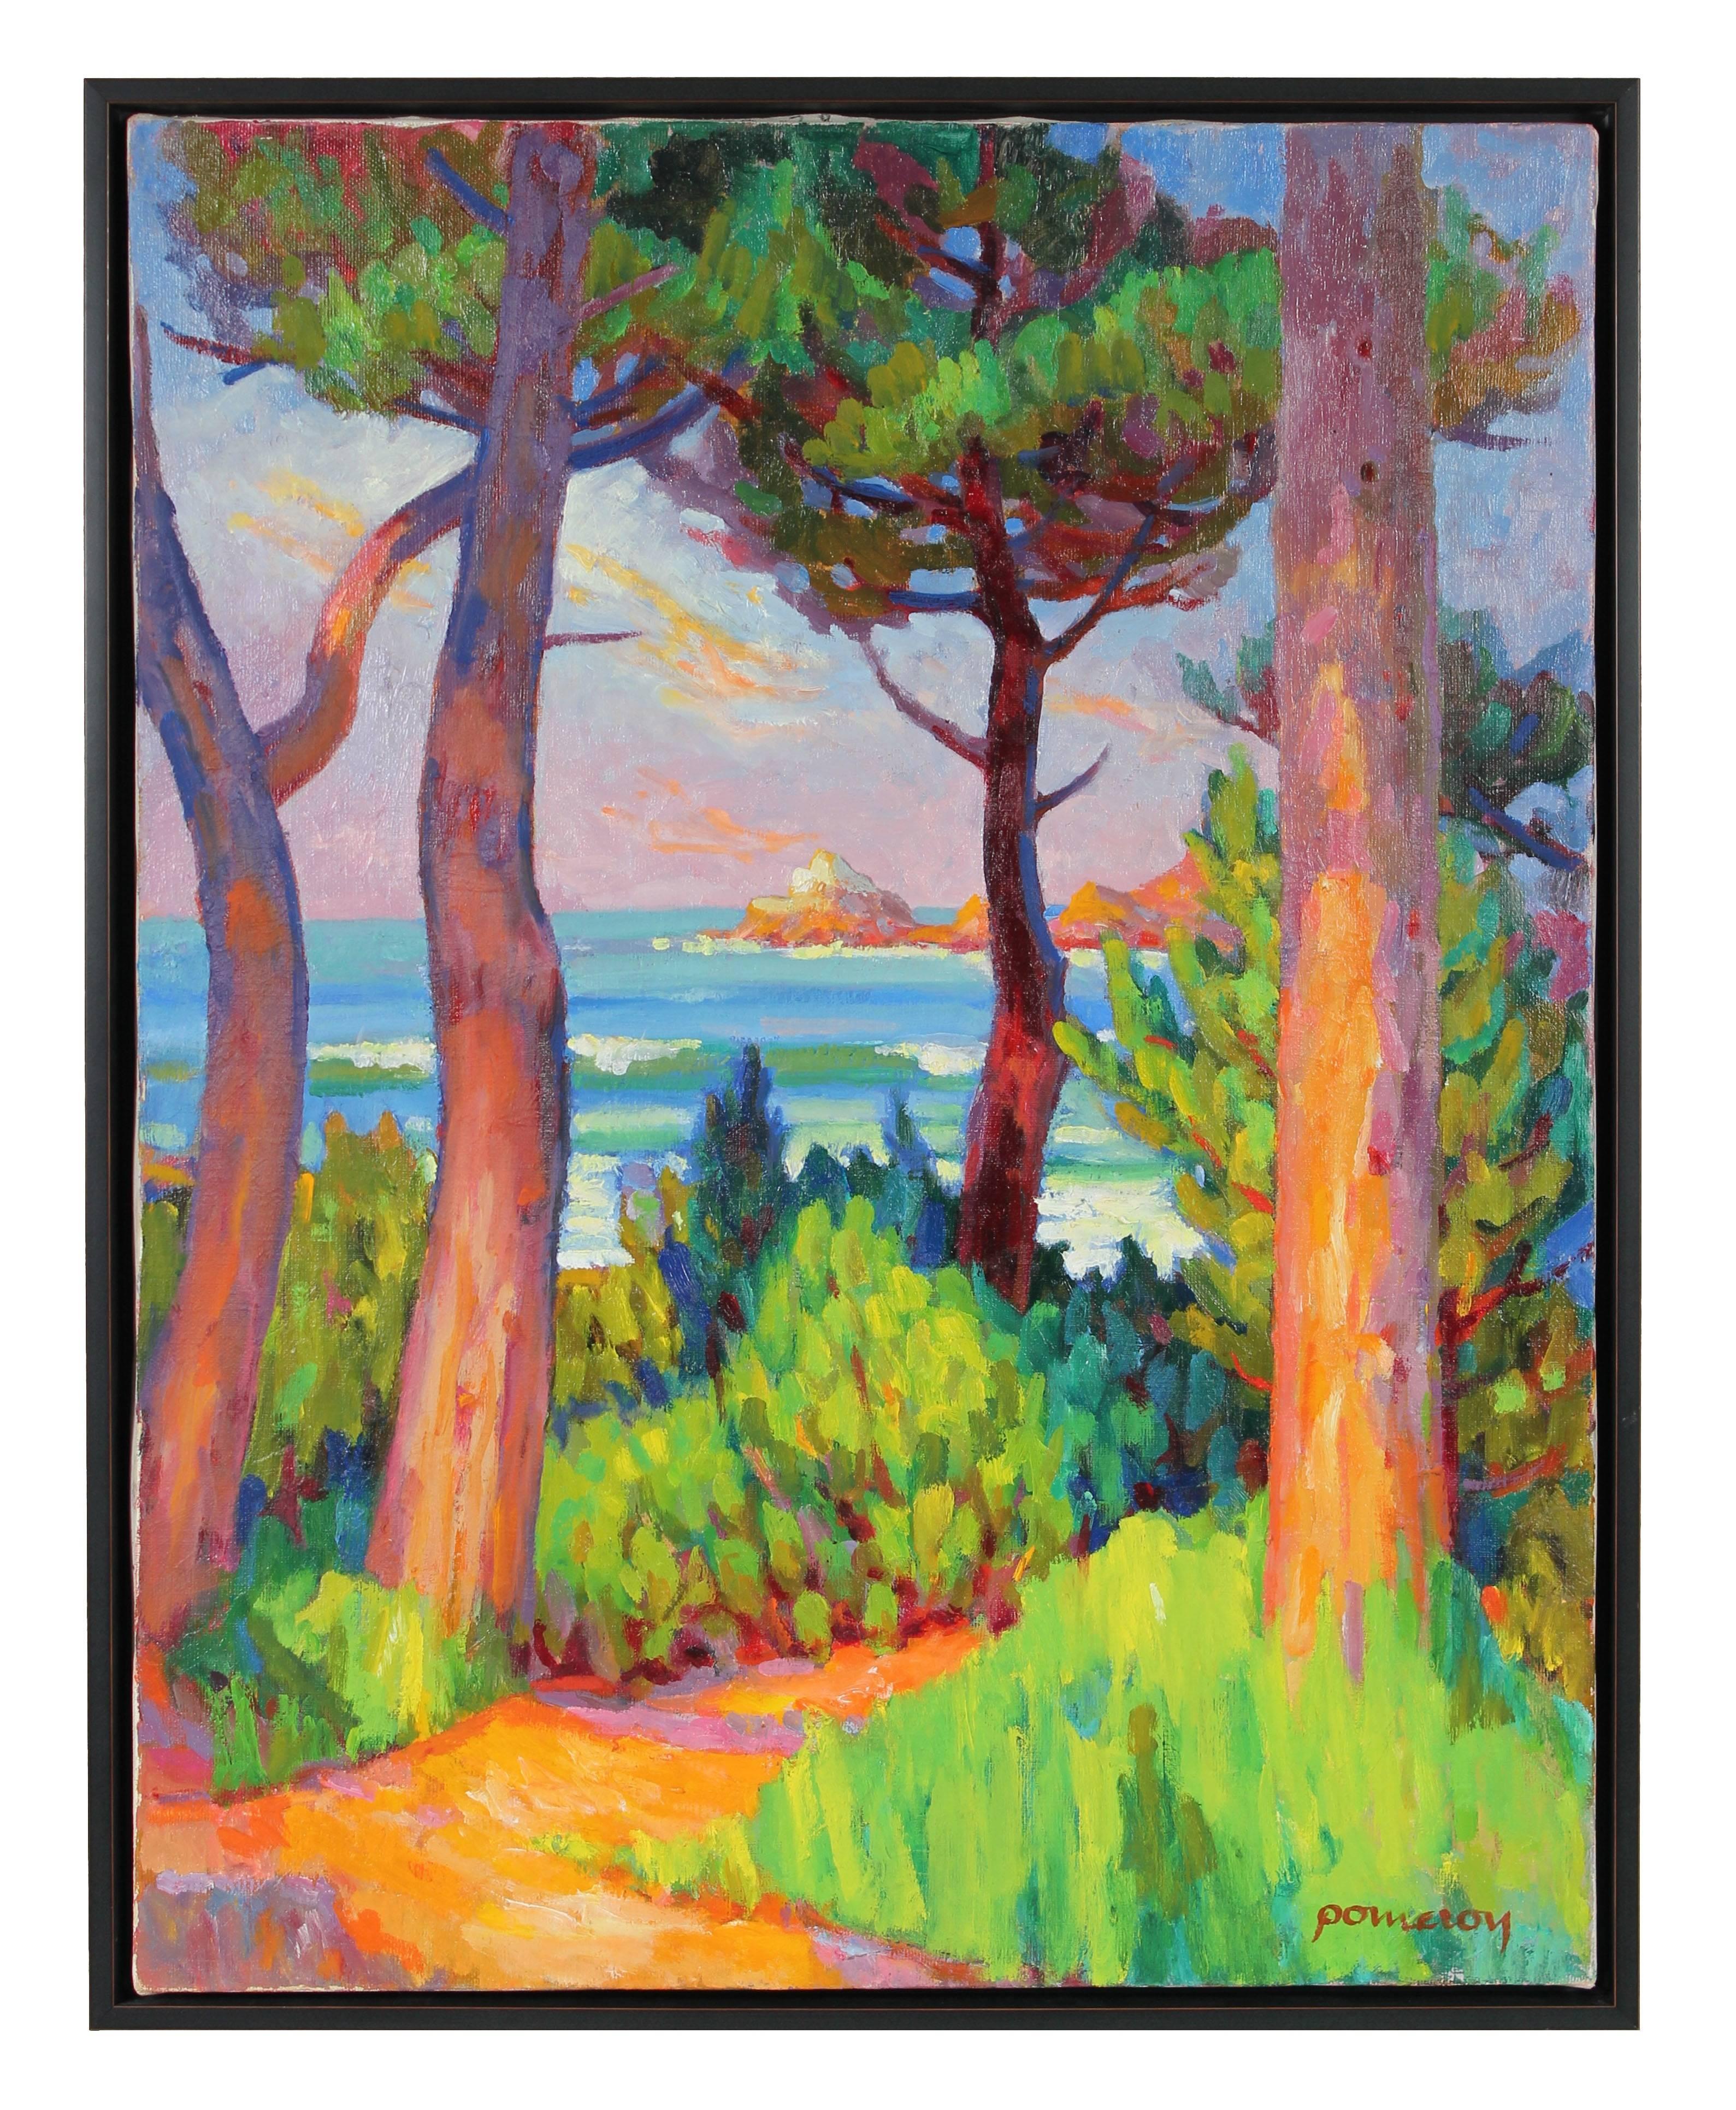 Frederick Pomeroy Landscape Painting - Carmel Cypress Grove by the Sea, Oil on Canvas Landscape